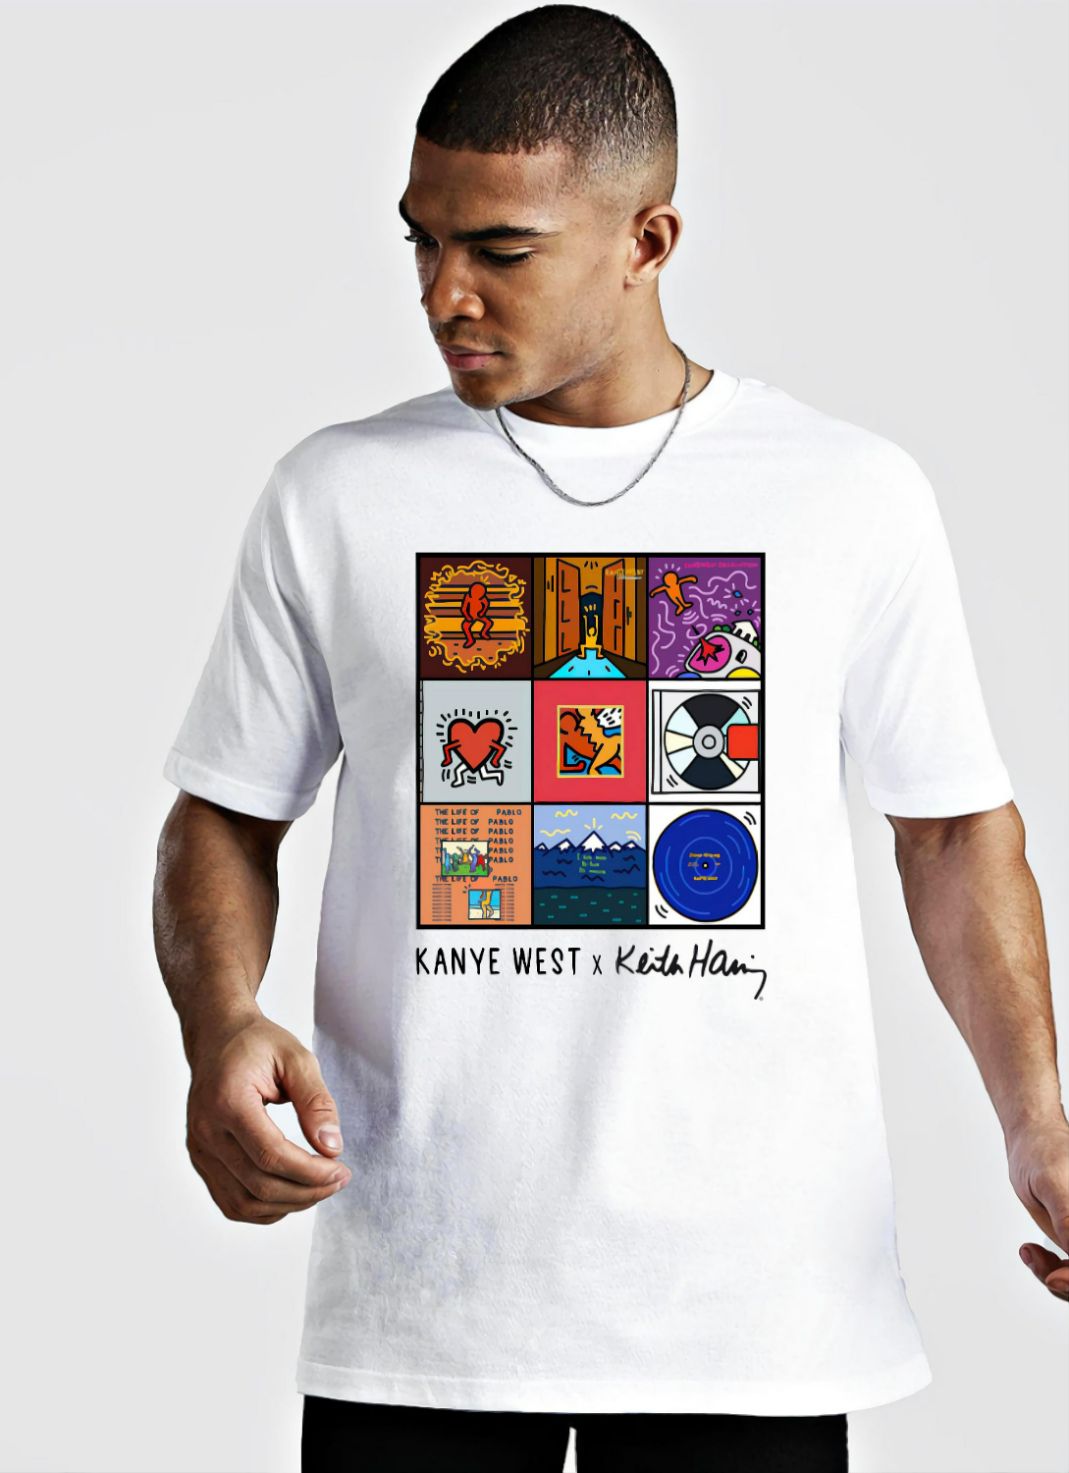 Kanye West X Keith Haring T-Shirt